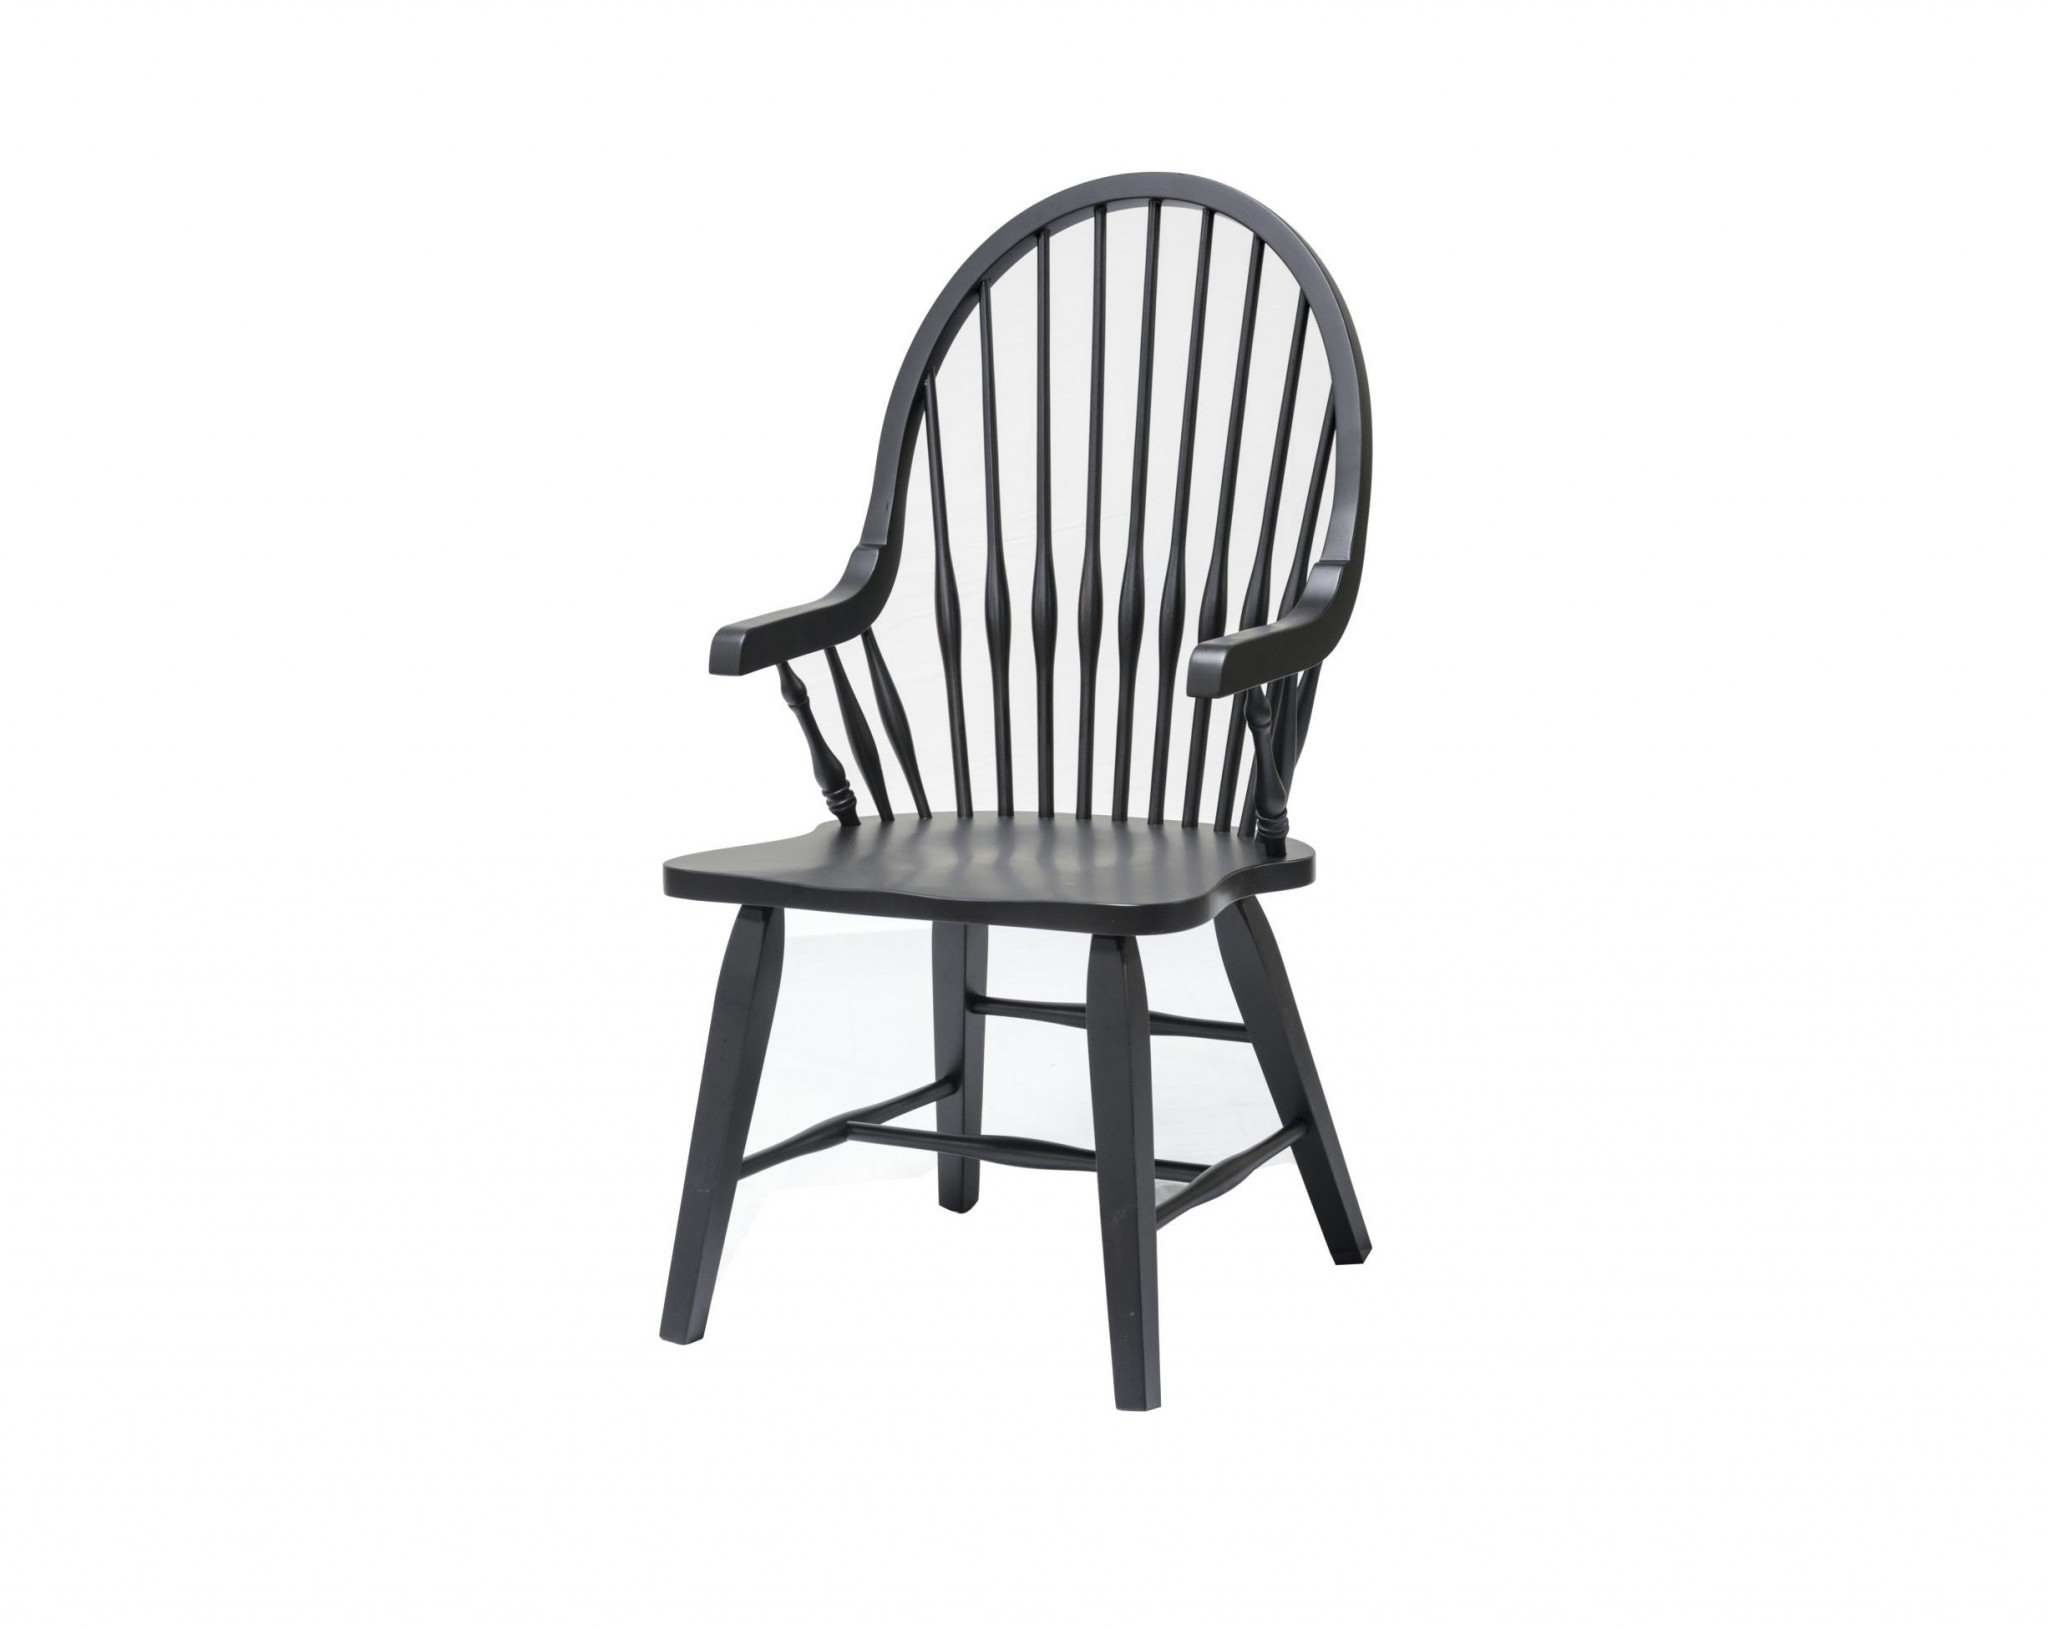 21.5" X 21.5" X 41" Black Hardwood Teakwood Arm Chair